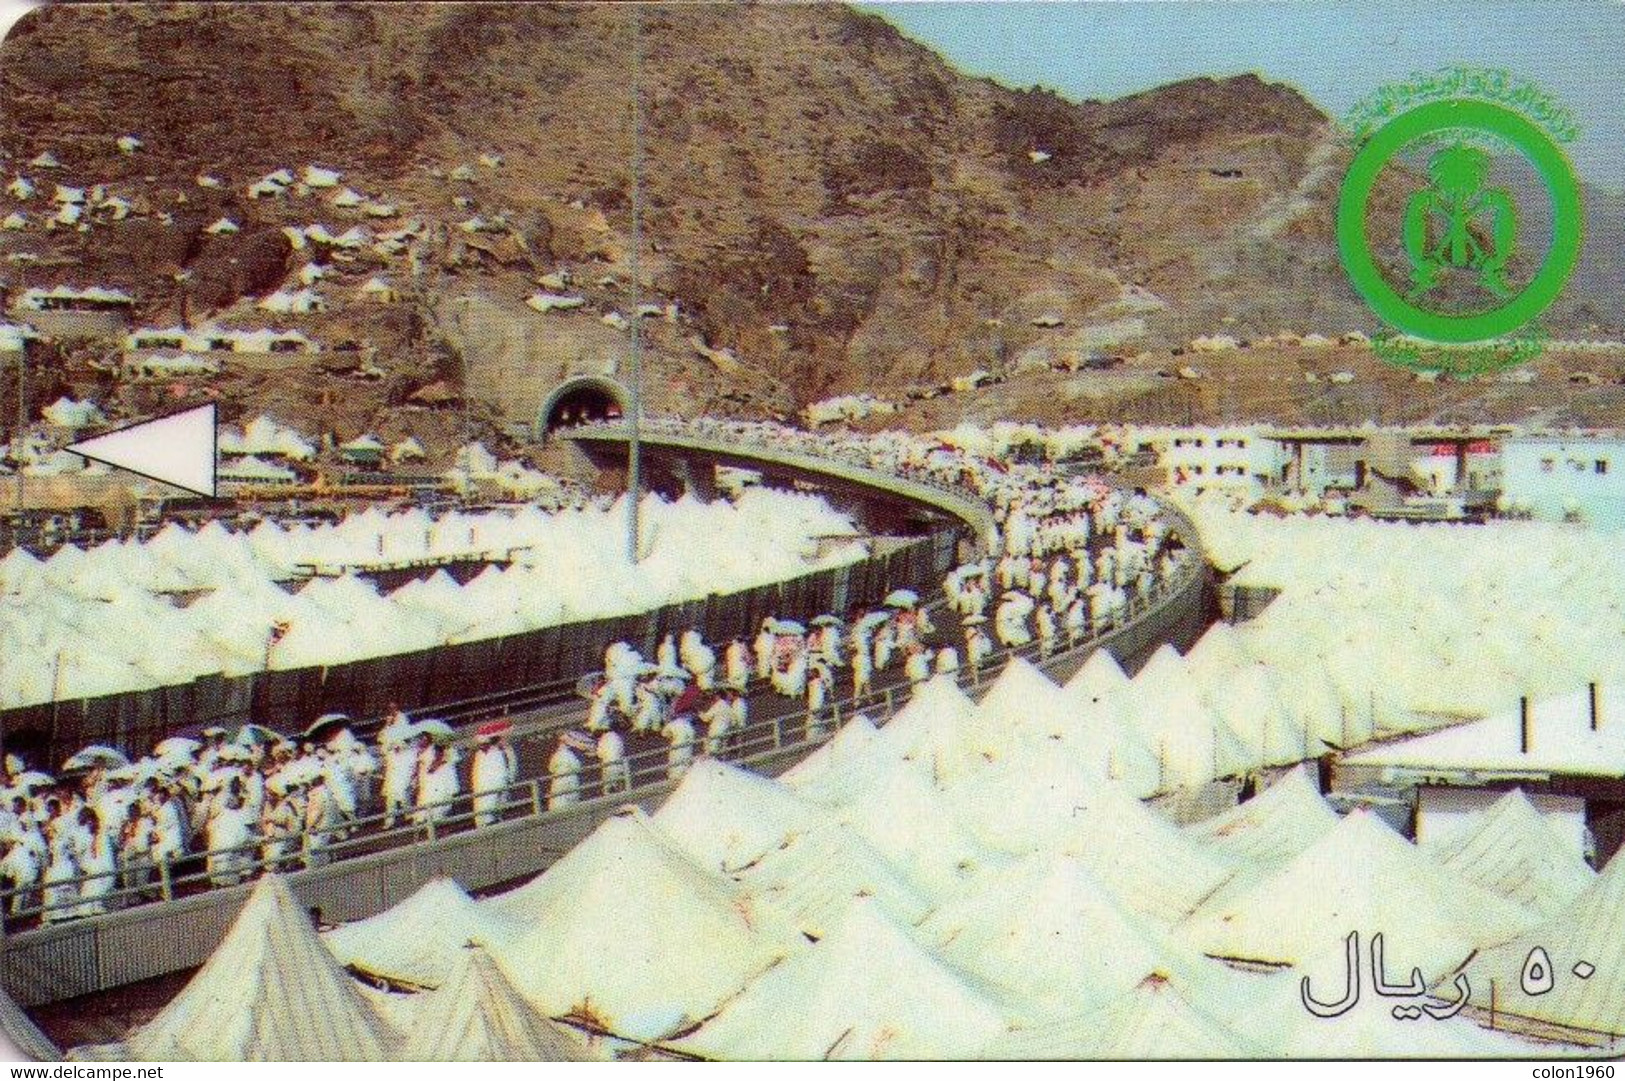 ARABIA SAUDITA. Mecca Tunnel Entrance "SAUDE". 1993. SA-STC-0003 (SAUDE). (008) - Saoedi-Arabië